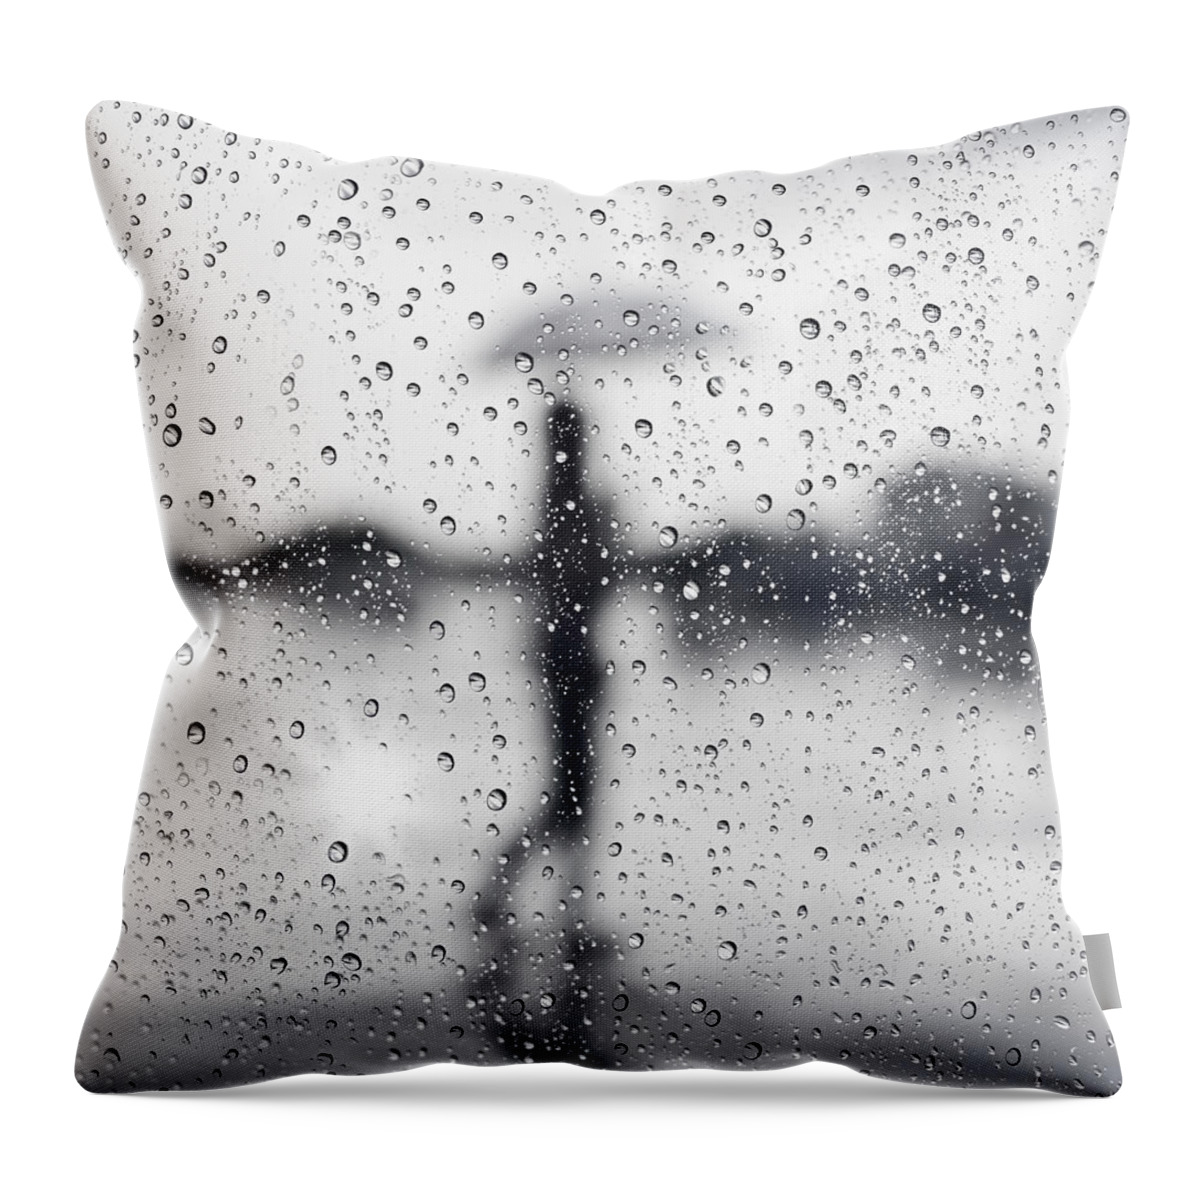 Abstract Throw Pillow featuring the photograph Rainy day by Setsiri Silapasuwanchai